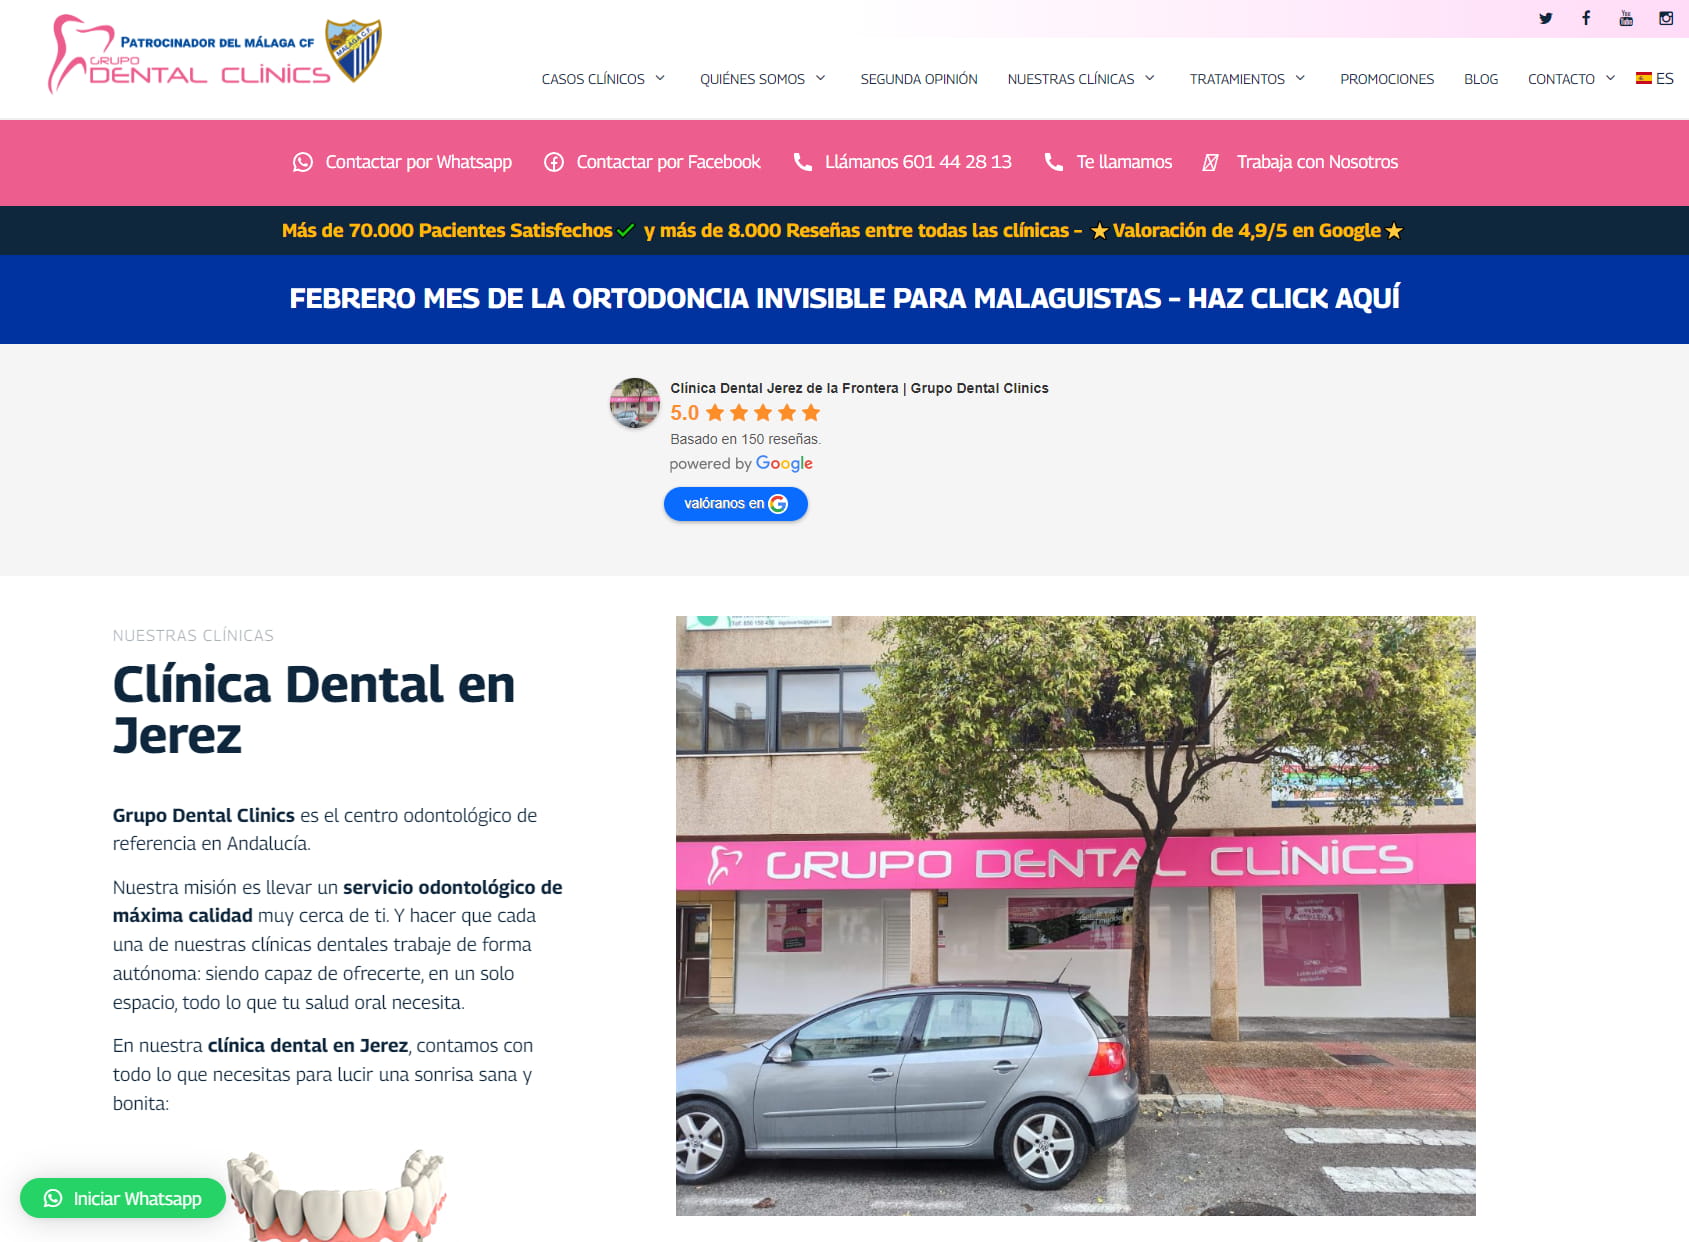 Clínica Dental Jerez de la Frontera | Grupo Dental Clinics